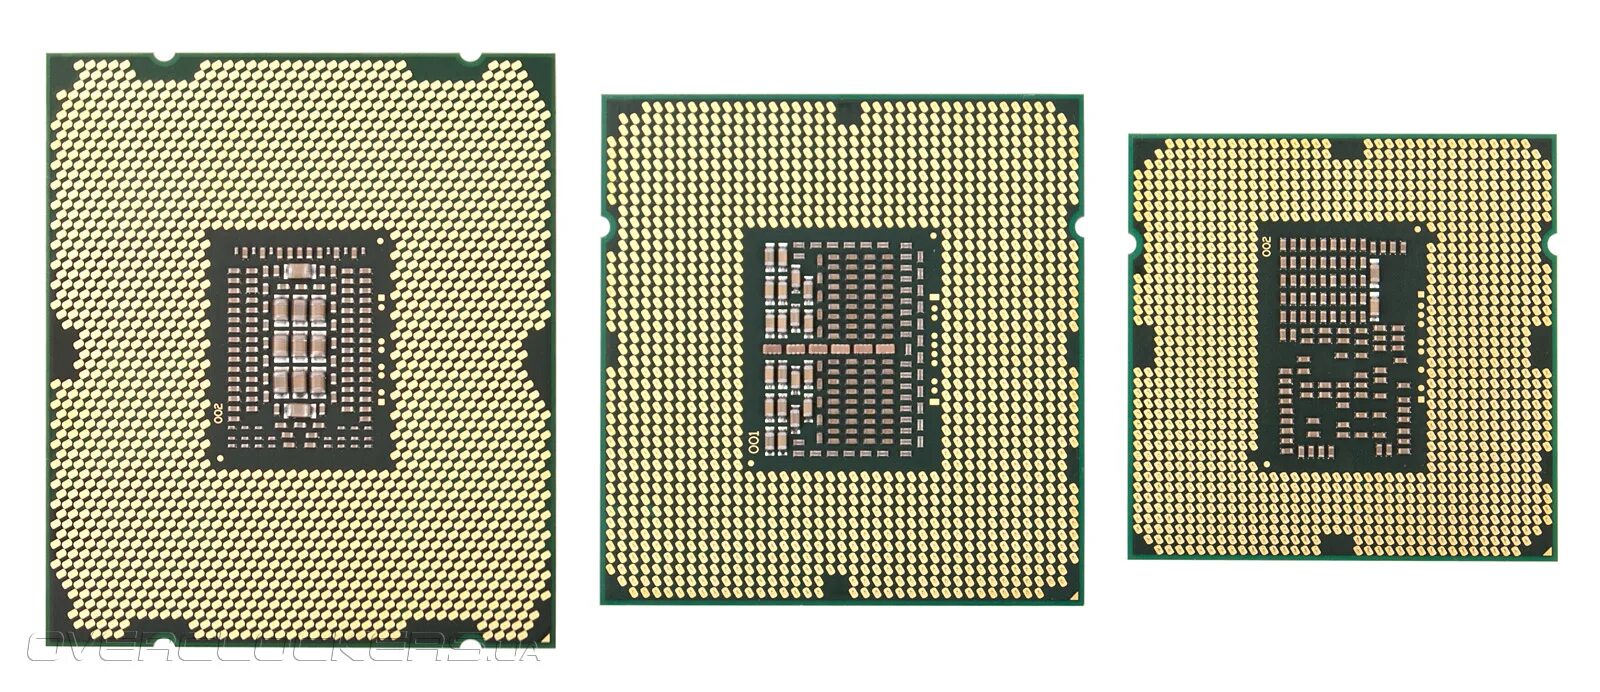 I7 3930k. Процессор i7 3930k. Sandy Bridge & Intel Core i7. Intel Xeon e5-1650 Sandy Bridge-e lga2011, 6 x 3200 МГЦ. Intel Core i3-2130 Sandy Bridge lga1155, 2 x 3400 МГЦ.